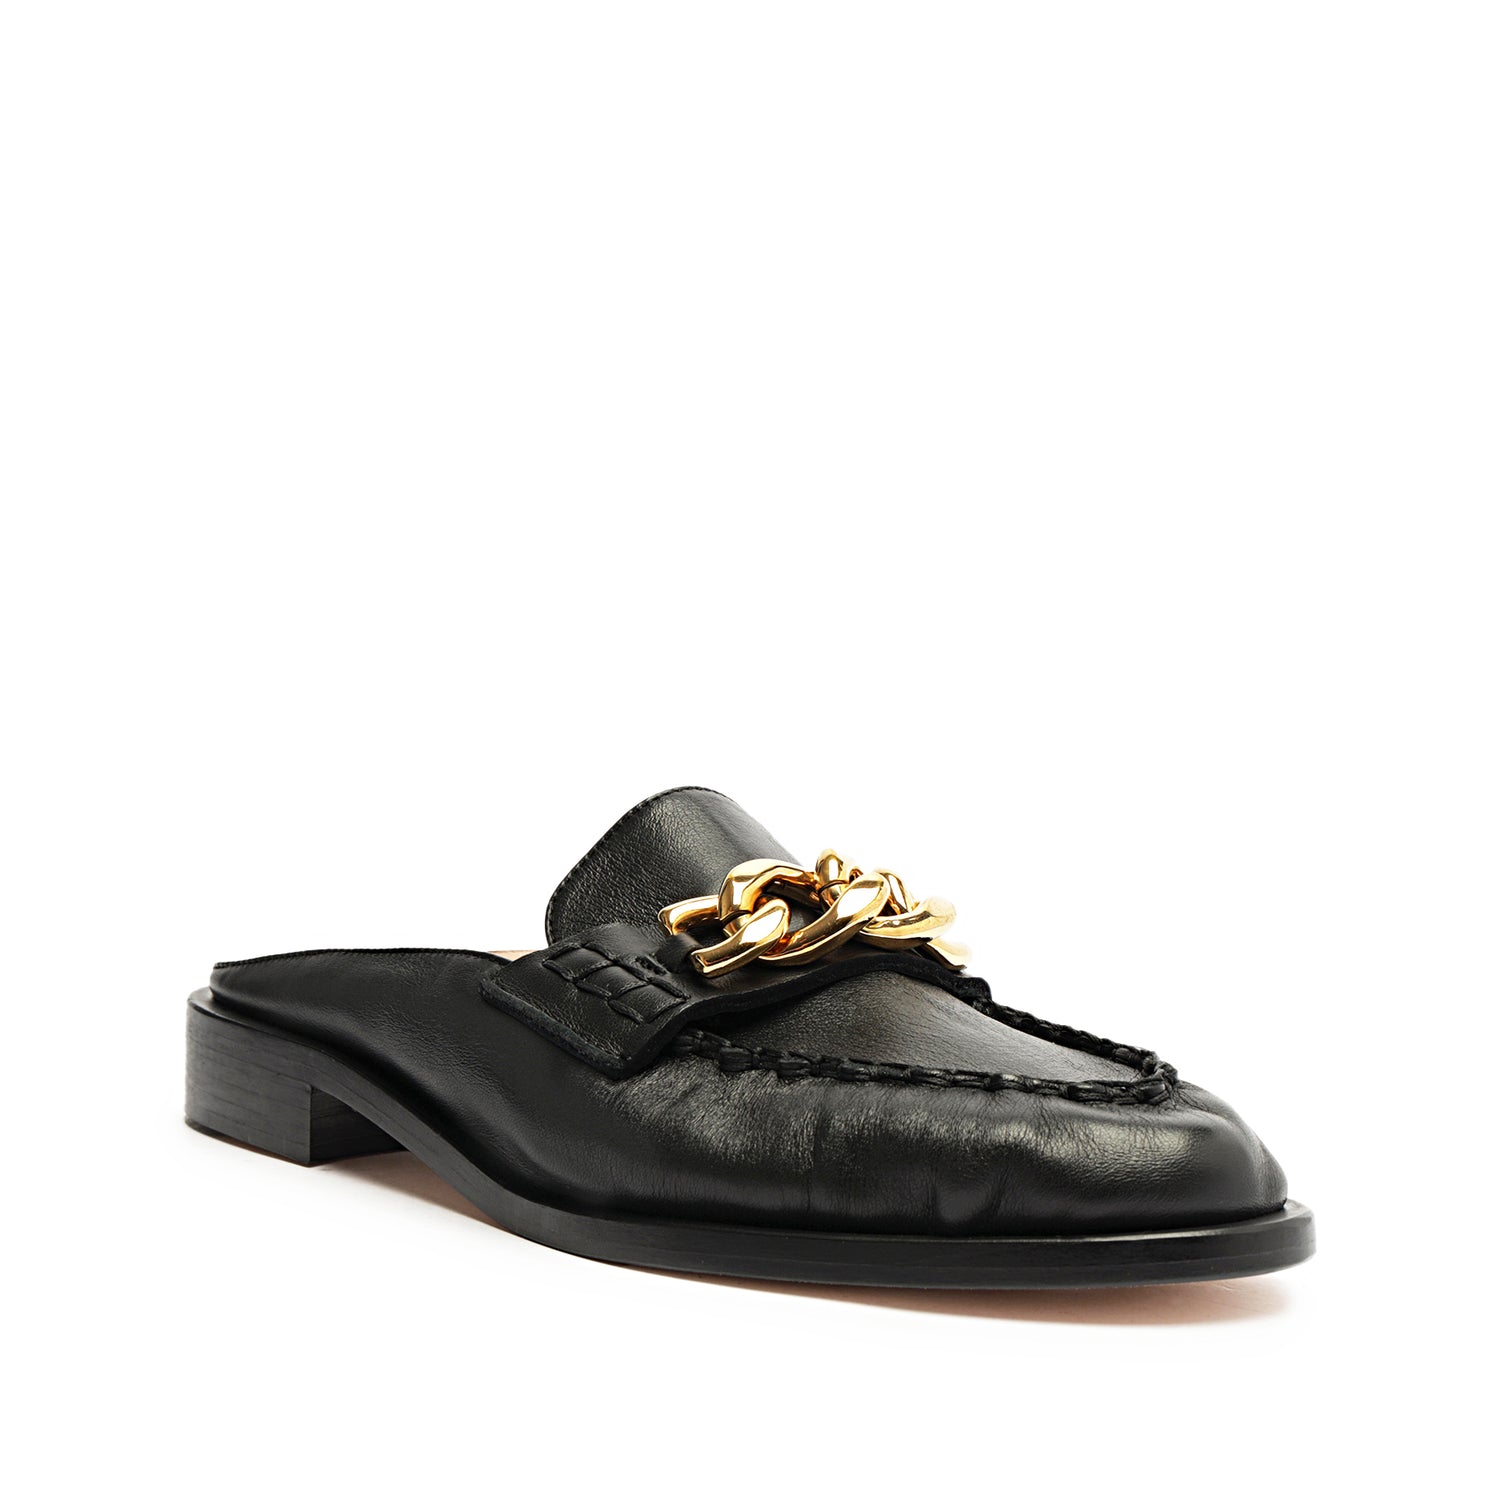 Luca Chain Leather Flat Flats Fall 23    - Schutz Shoes